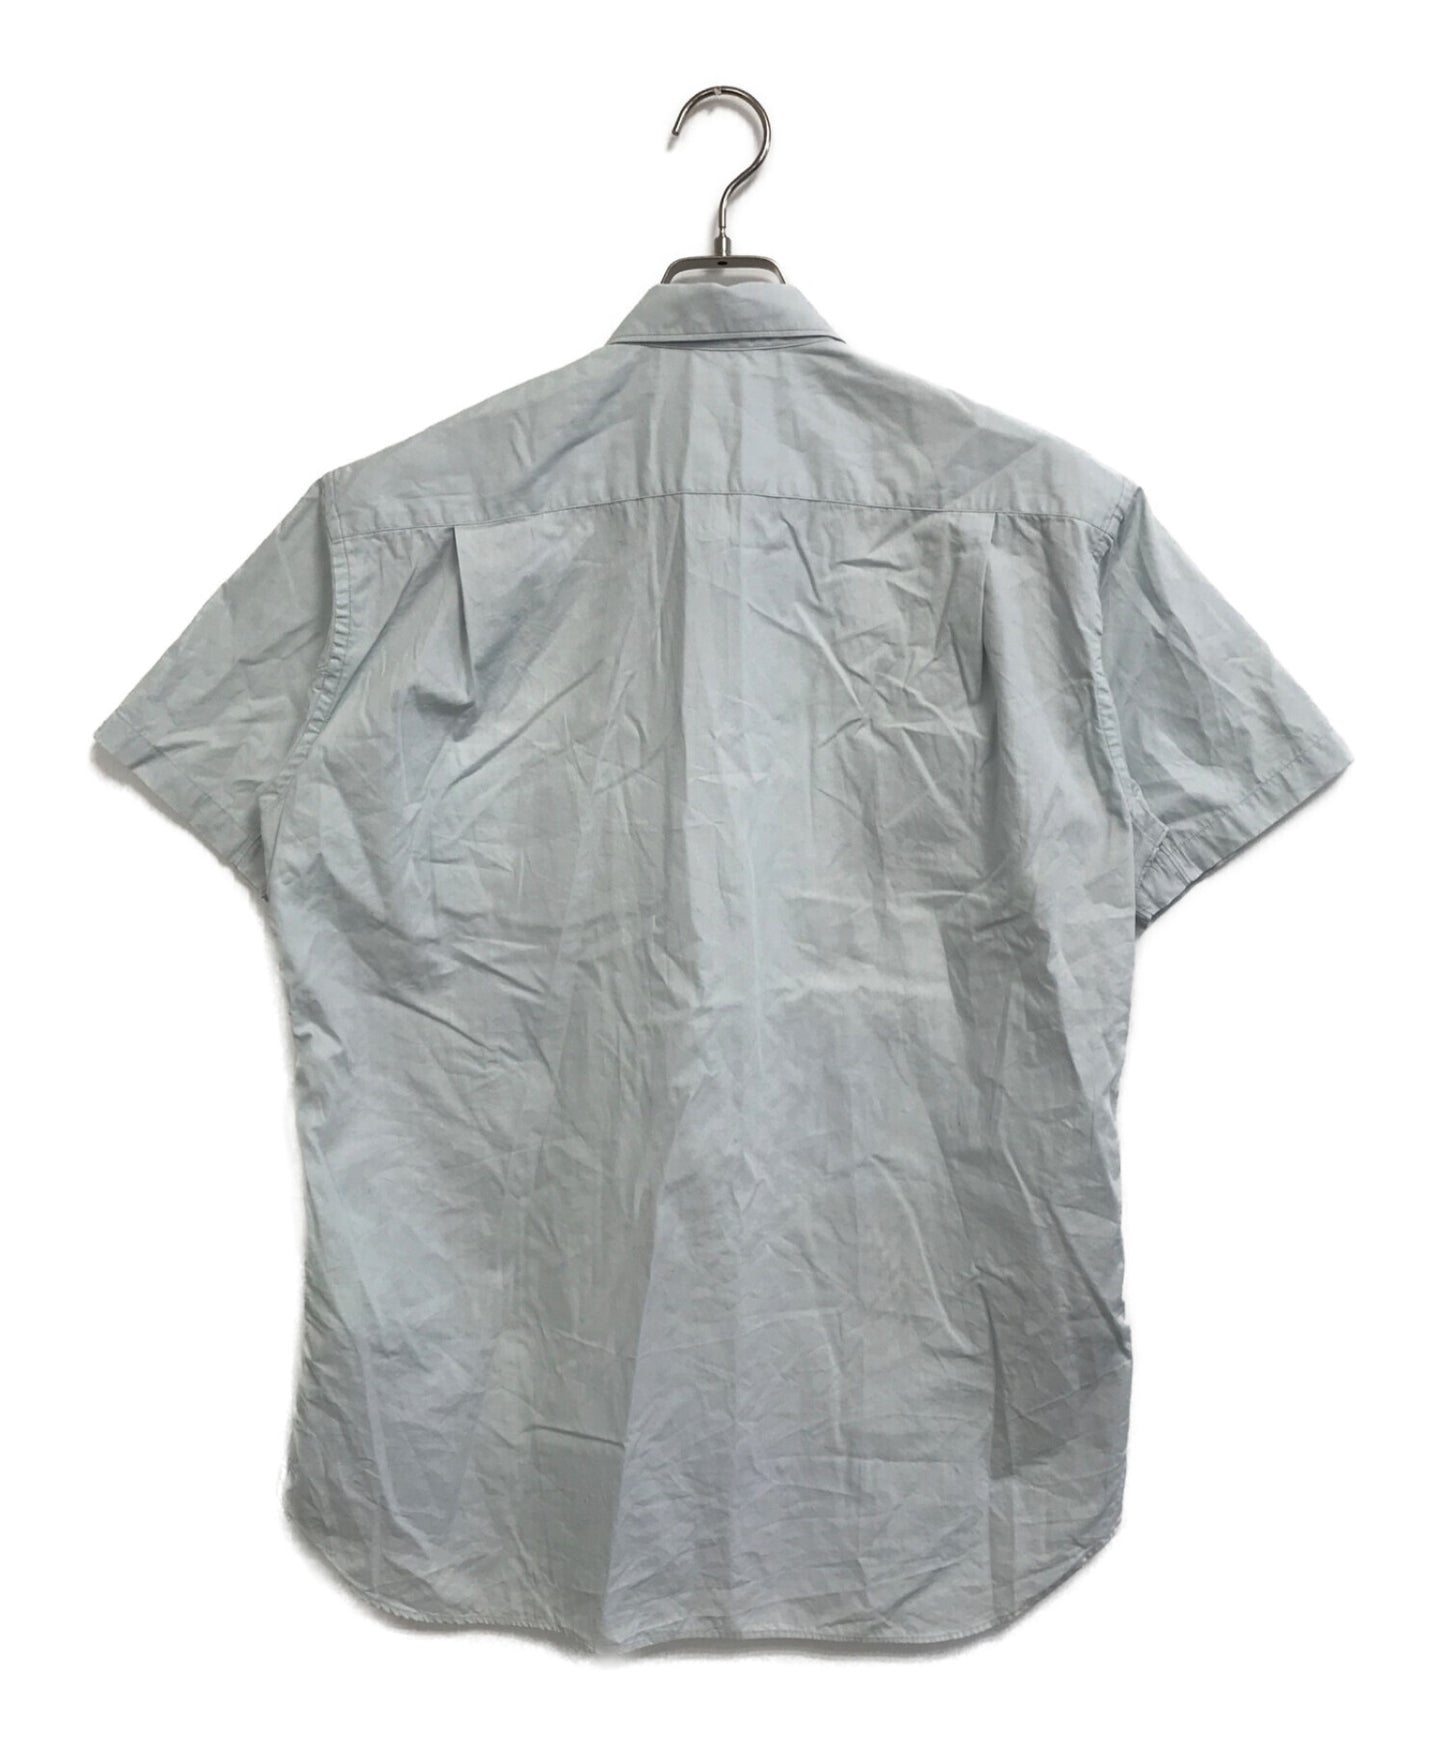 Comme des Garcons 셔츠 미친 패턴 재건 짧은 소매 셔츠 S24047